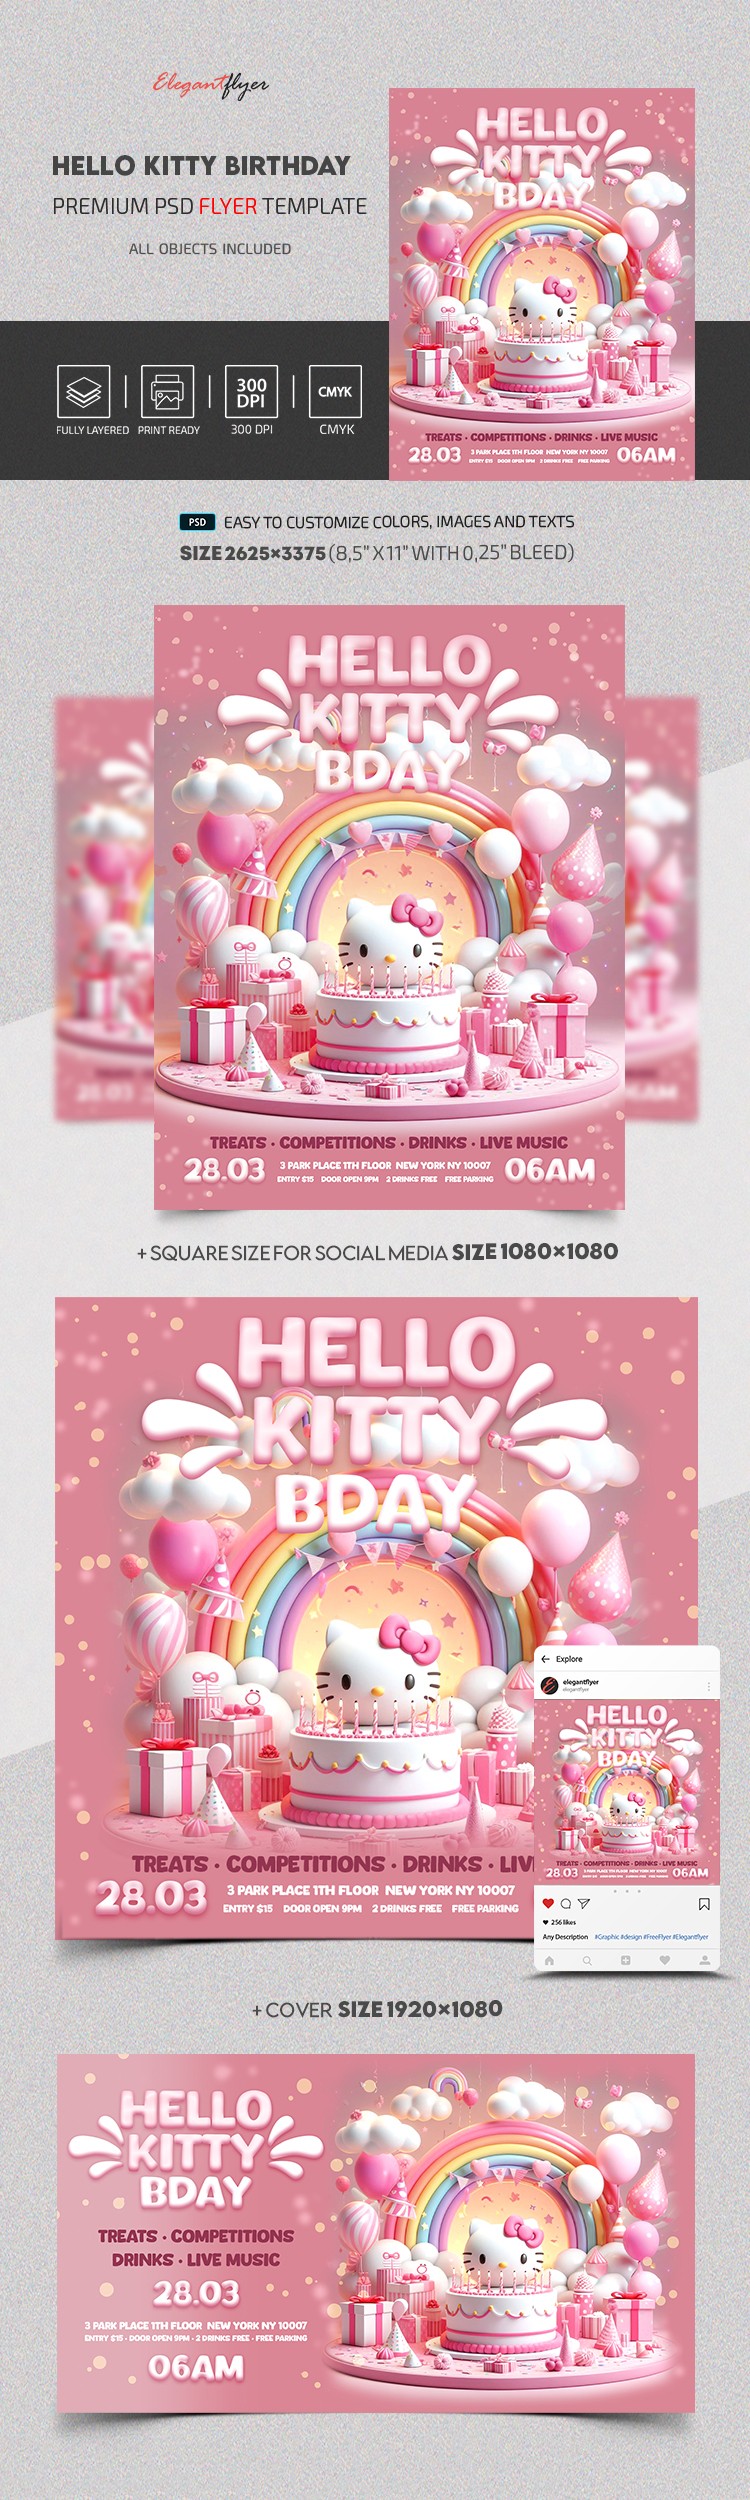 Buon compleanno Hello Kitty by ElegantFlyer